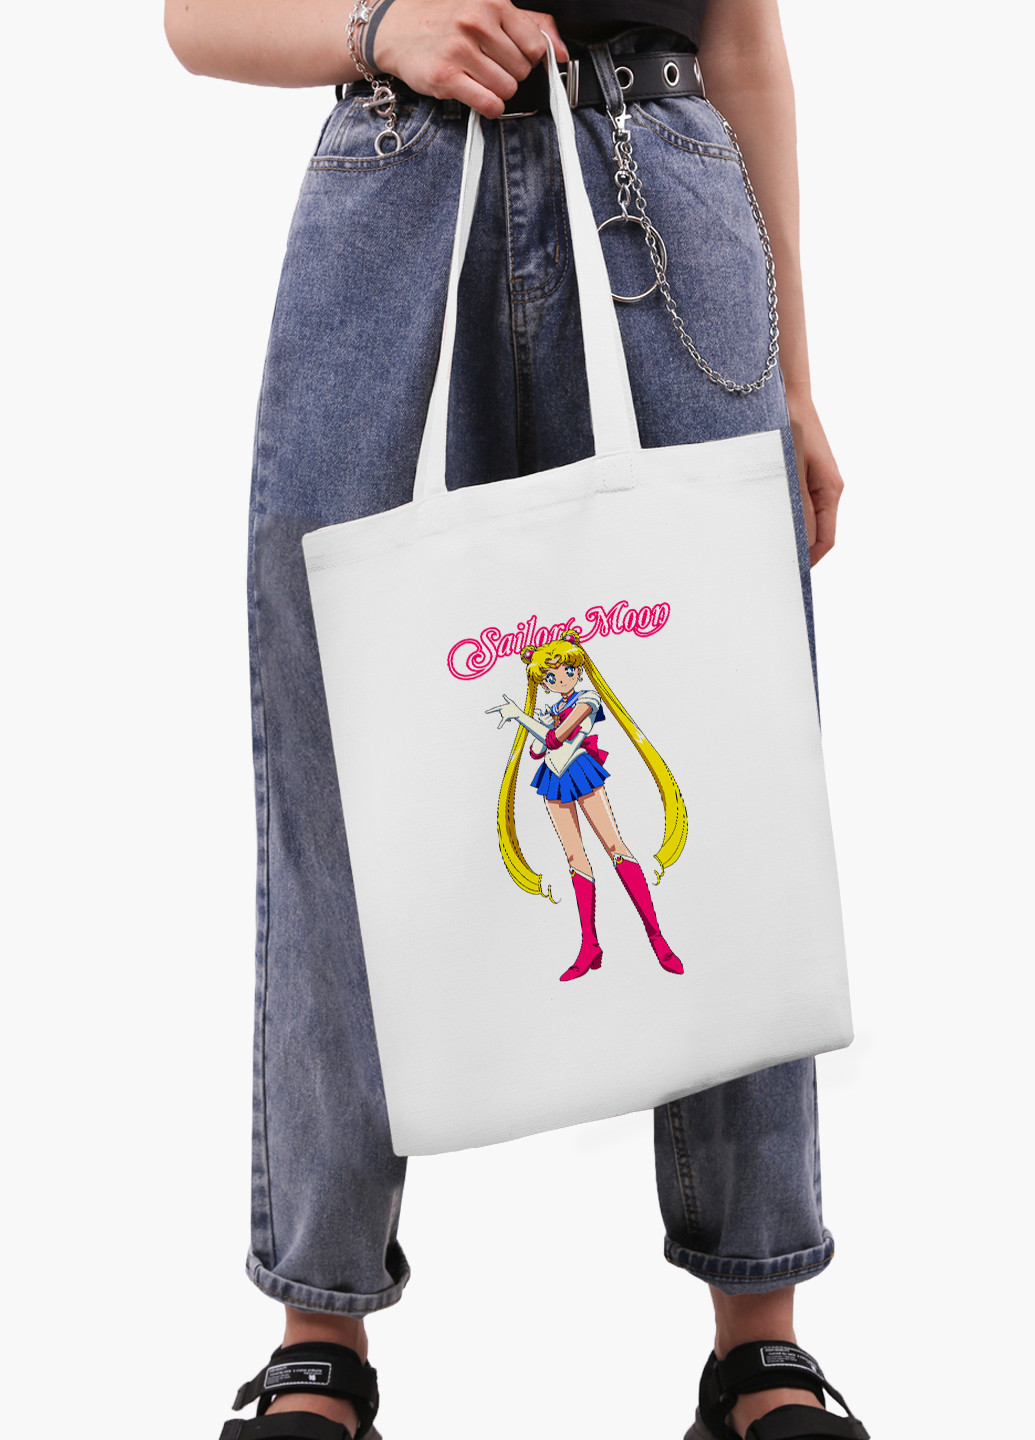 Эко сумка шоппер белая Сейлор Мун (Sailor Moon) (9227-2916-WT-2) экосумка шопер 41*35 см MobiPrint (224806138)